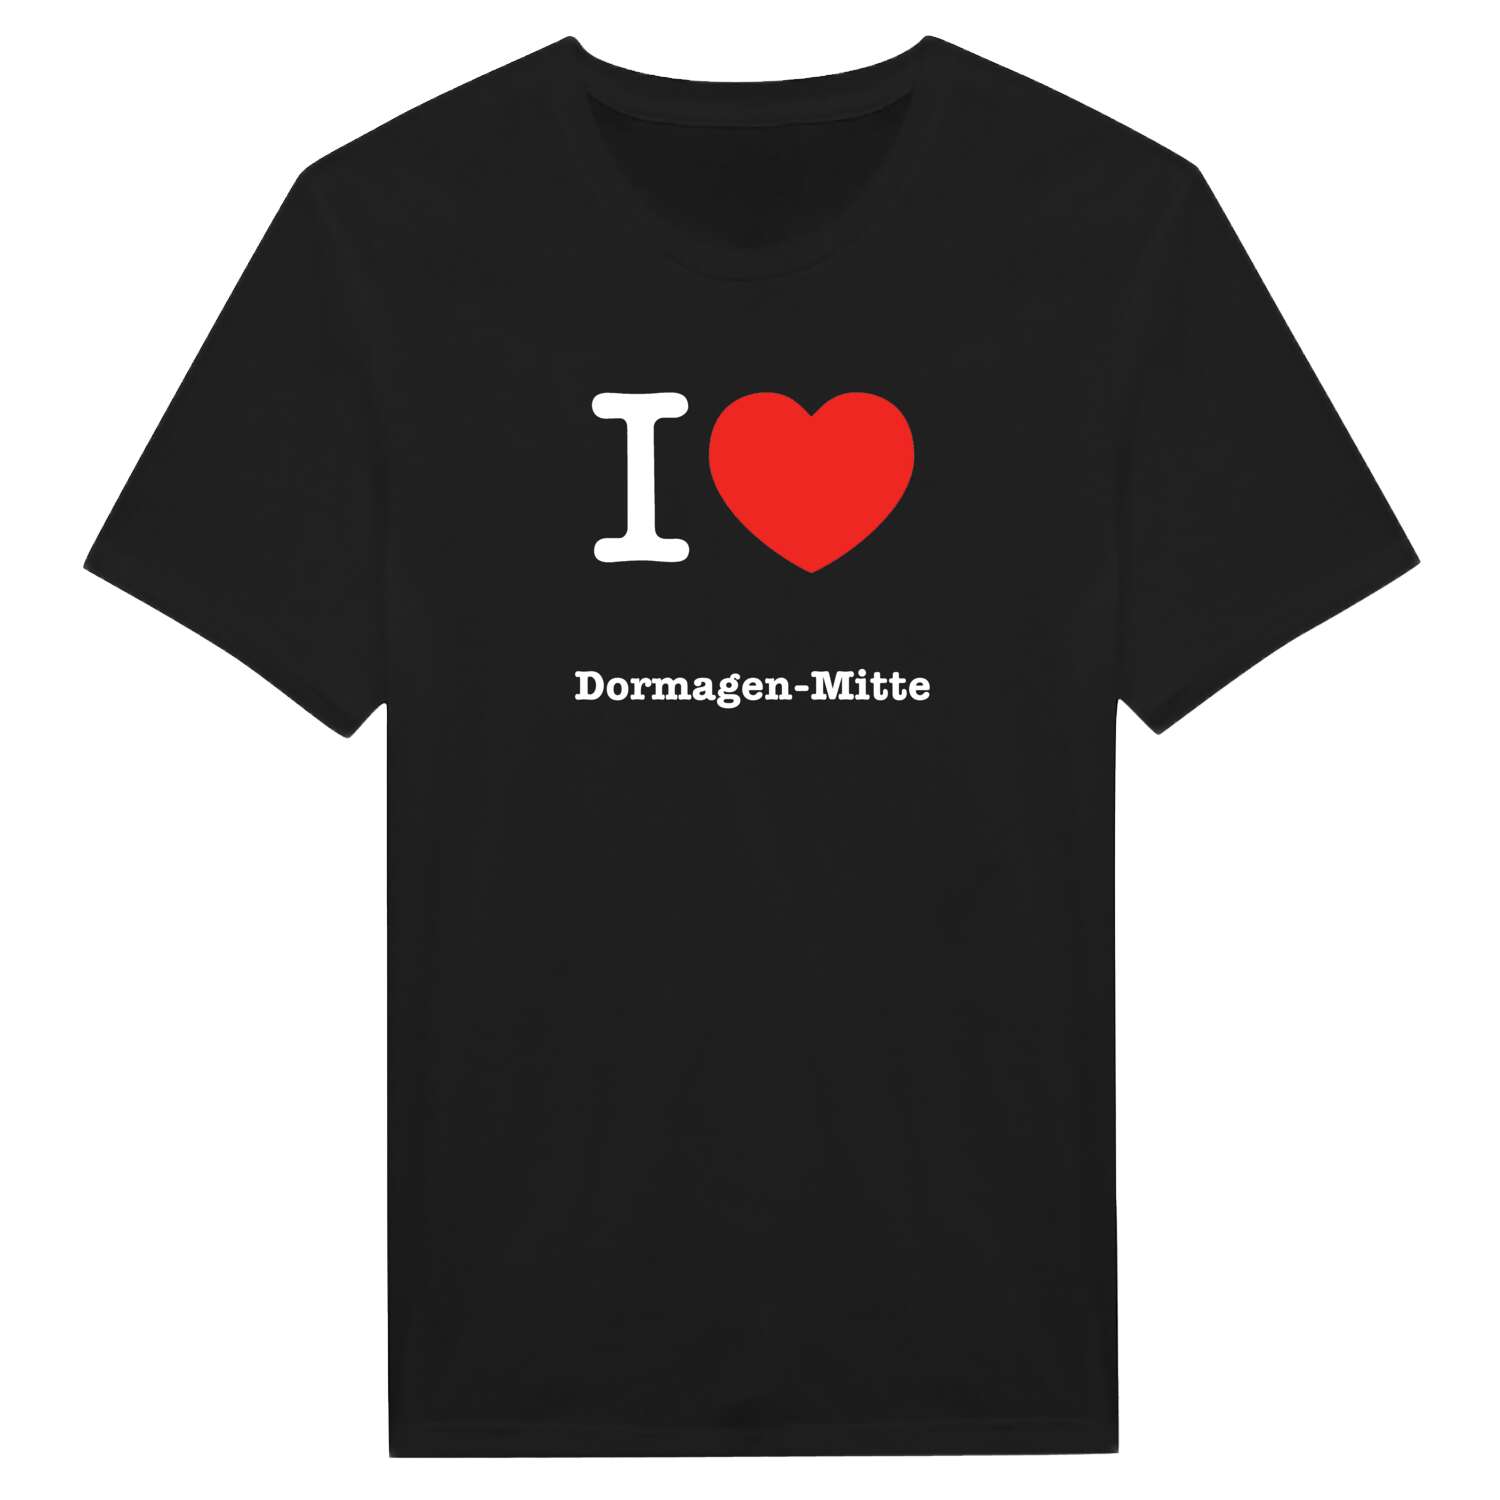 Dormagen-Mitte T-Shirt »I love«